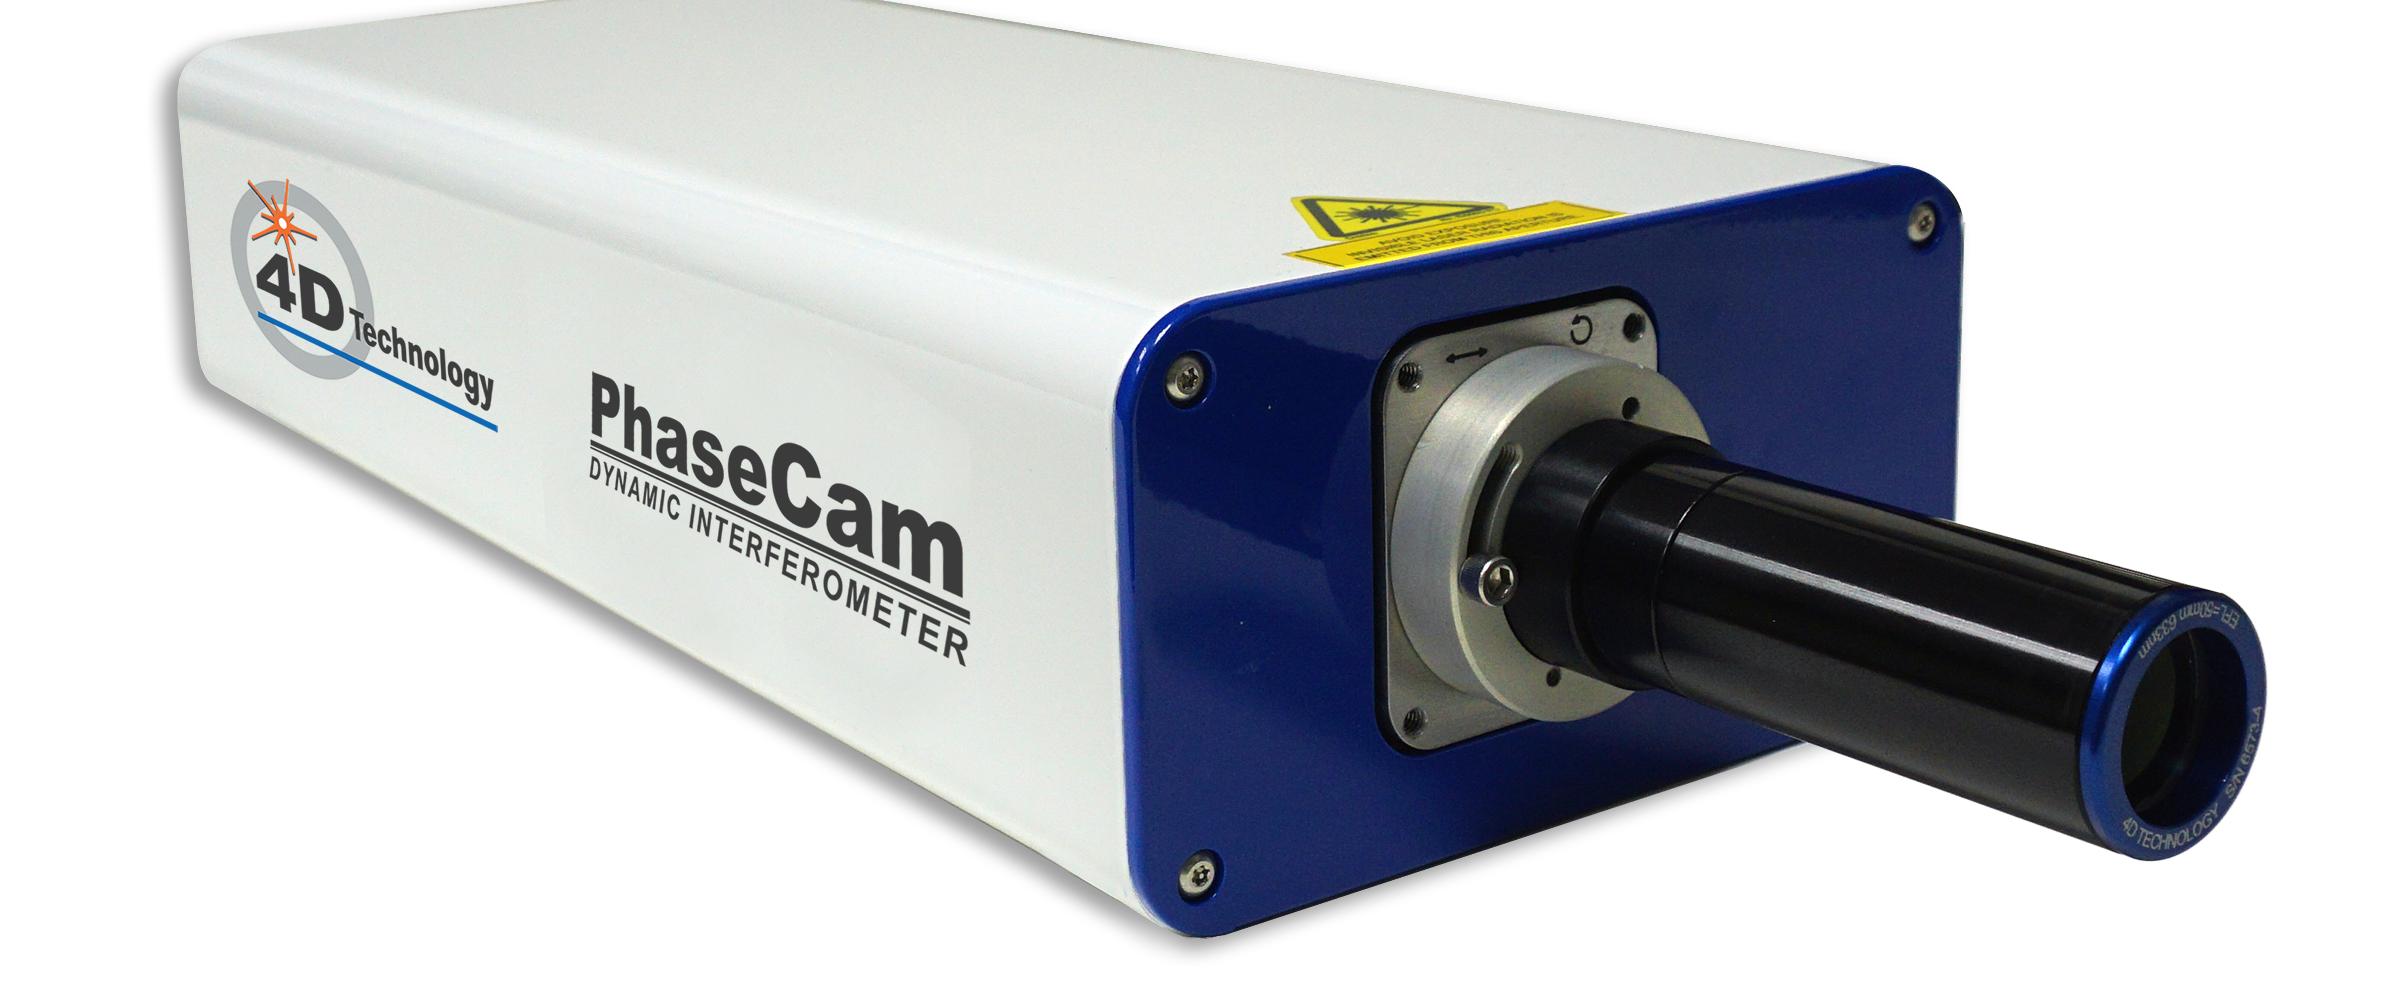 Measure Infrared Optics (IR Optics) - 4D Technology PhaseCam Twyman-Green IR Laser Interferometers at IR, NIR wavelengths